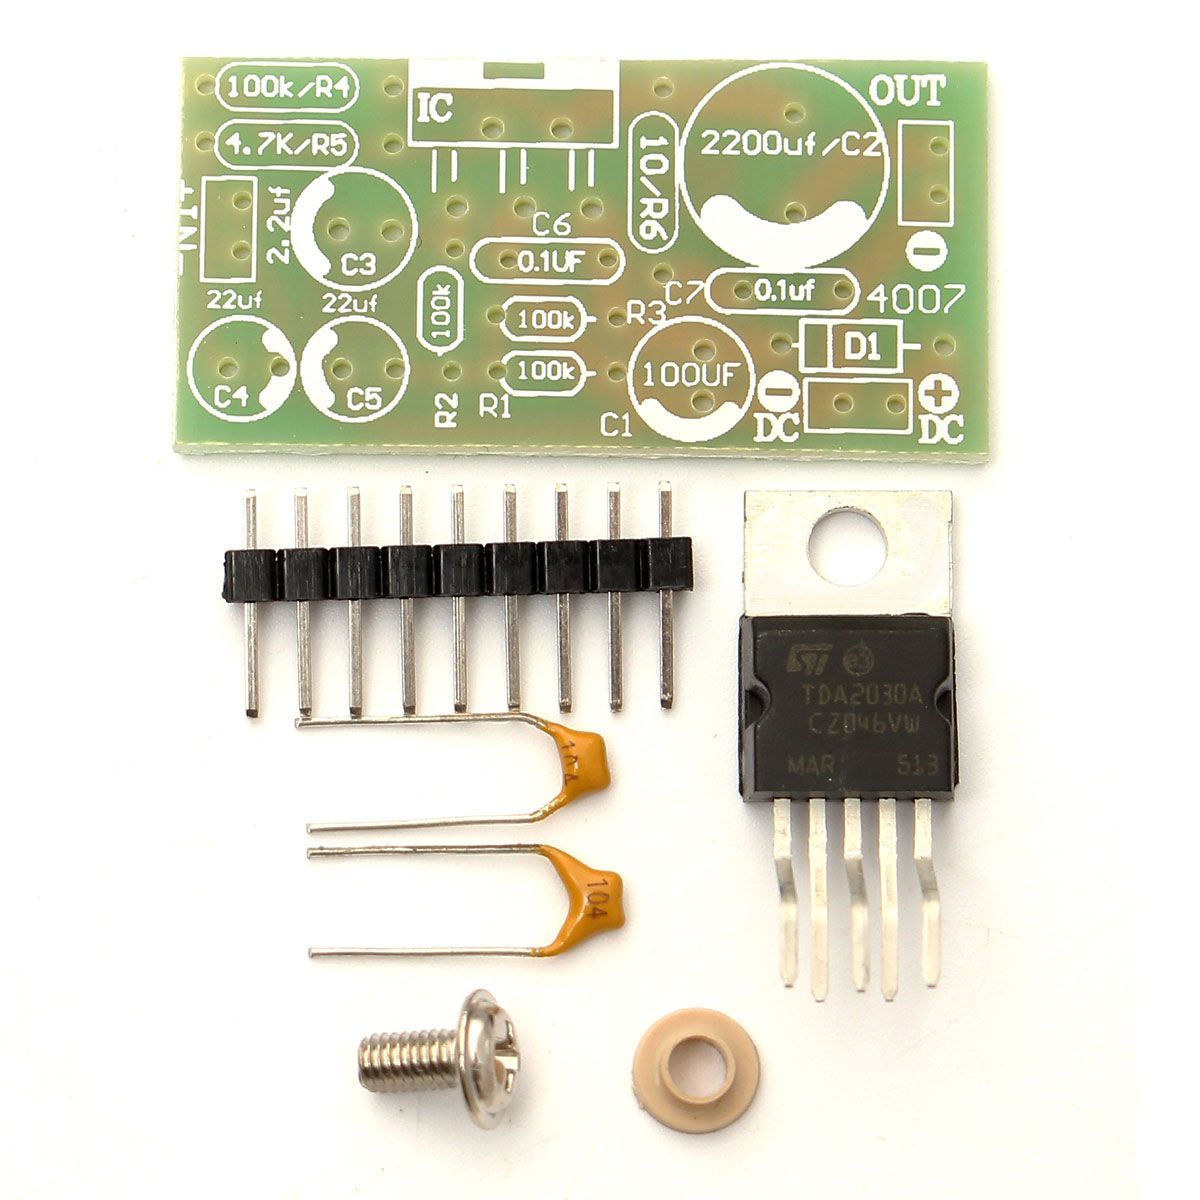 5pcs-DIY-TDA2030A-Audio-Amplifier-Board-Kit-Mono-Power-18W-DC-9V-24V-1355702